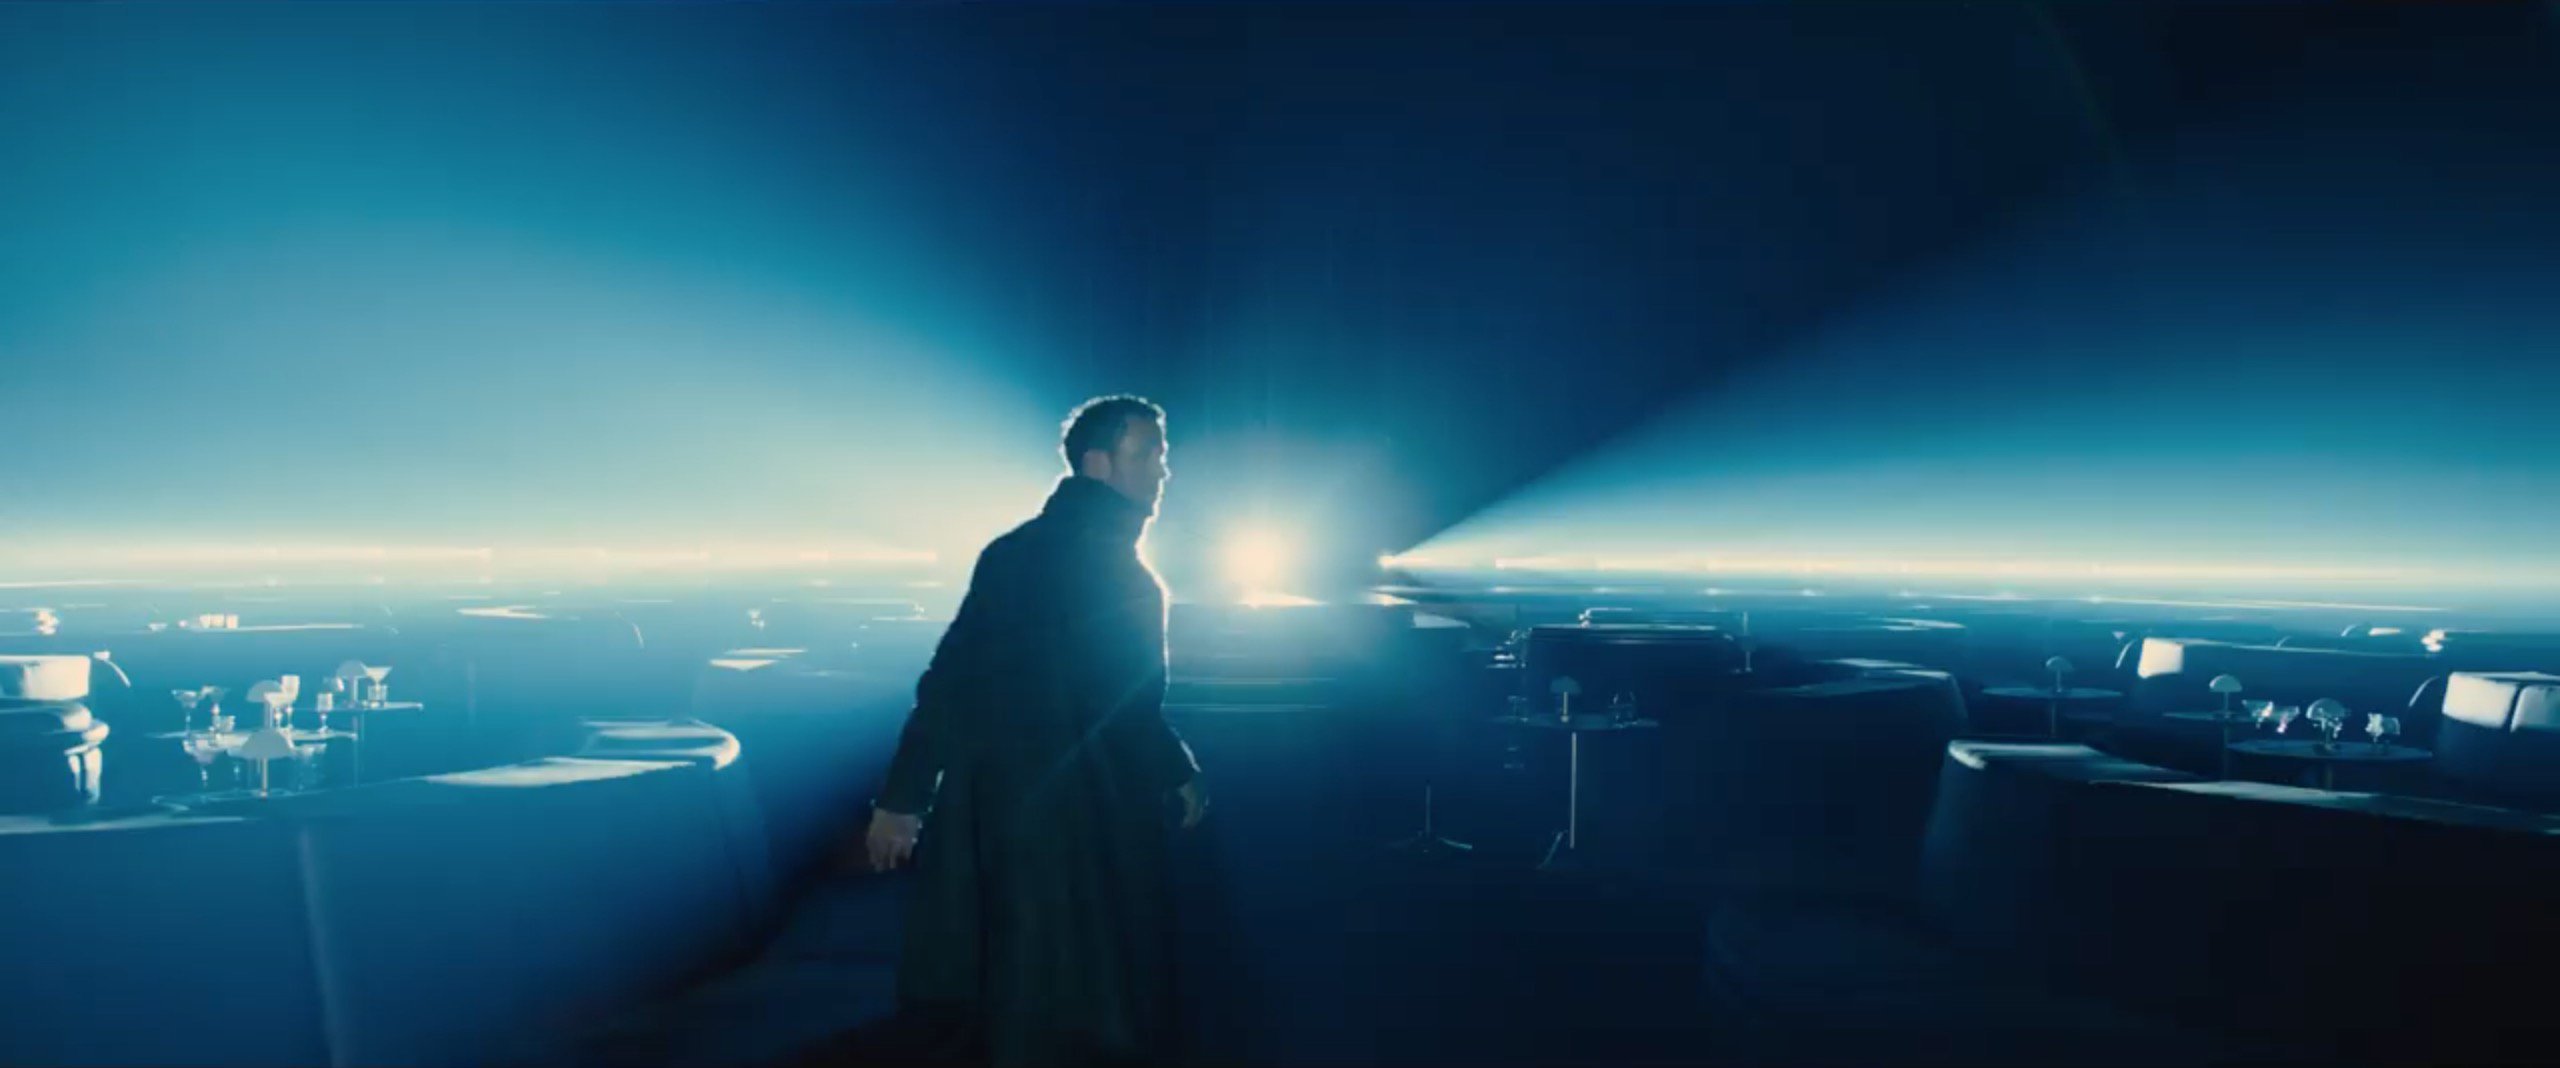 Blade Runner 2049 : démarrage poussif au box-office US